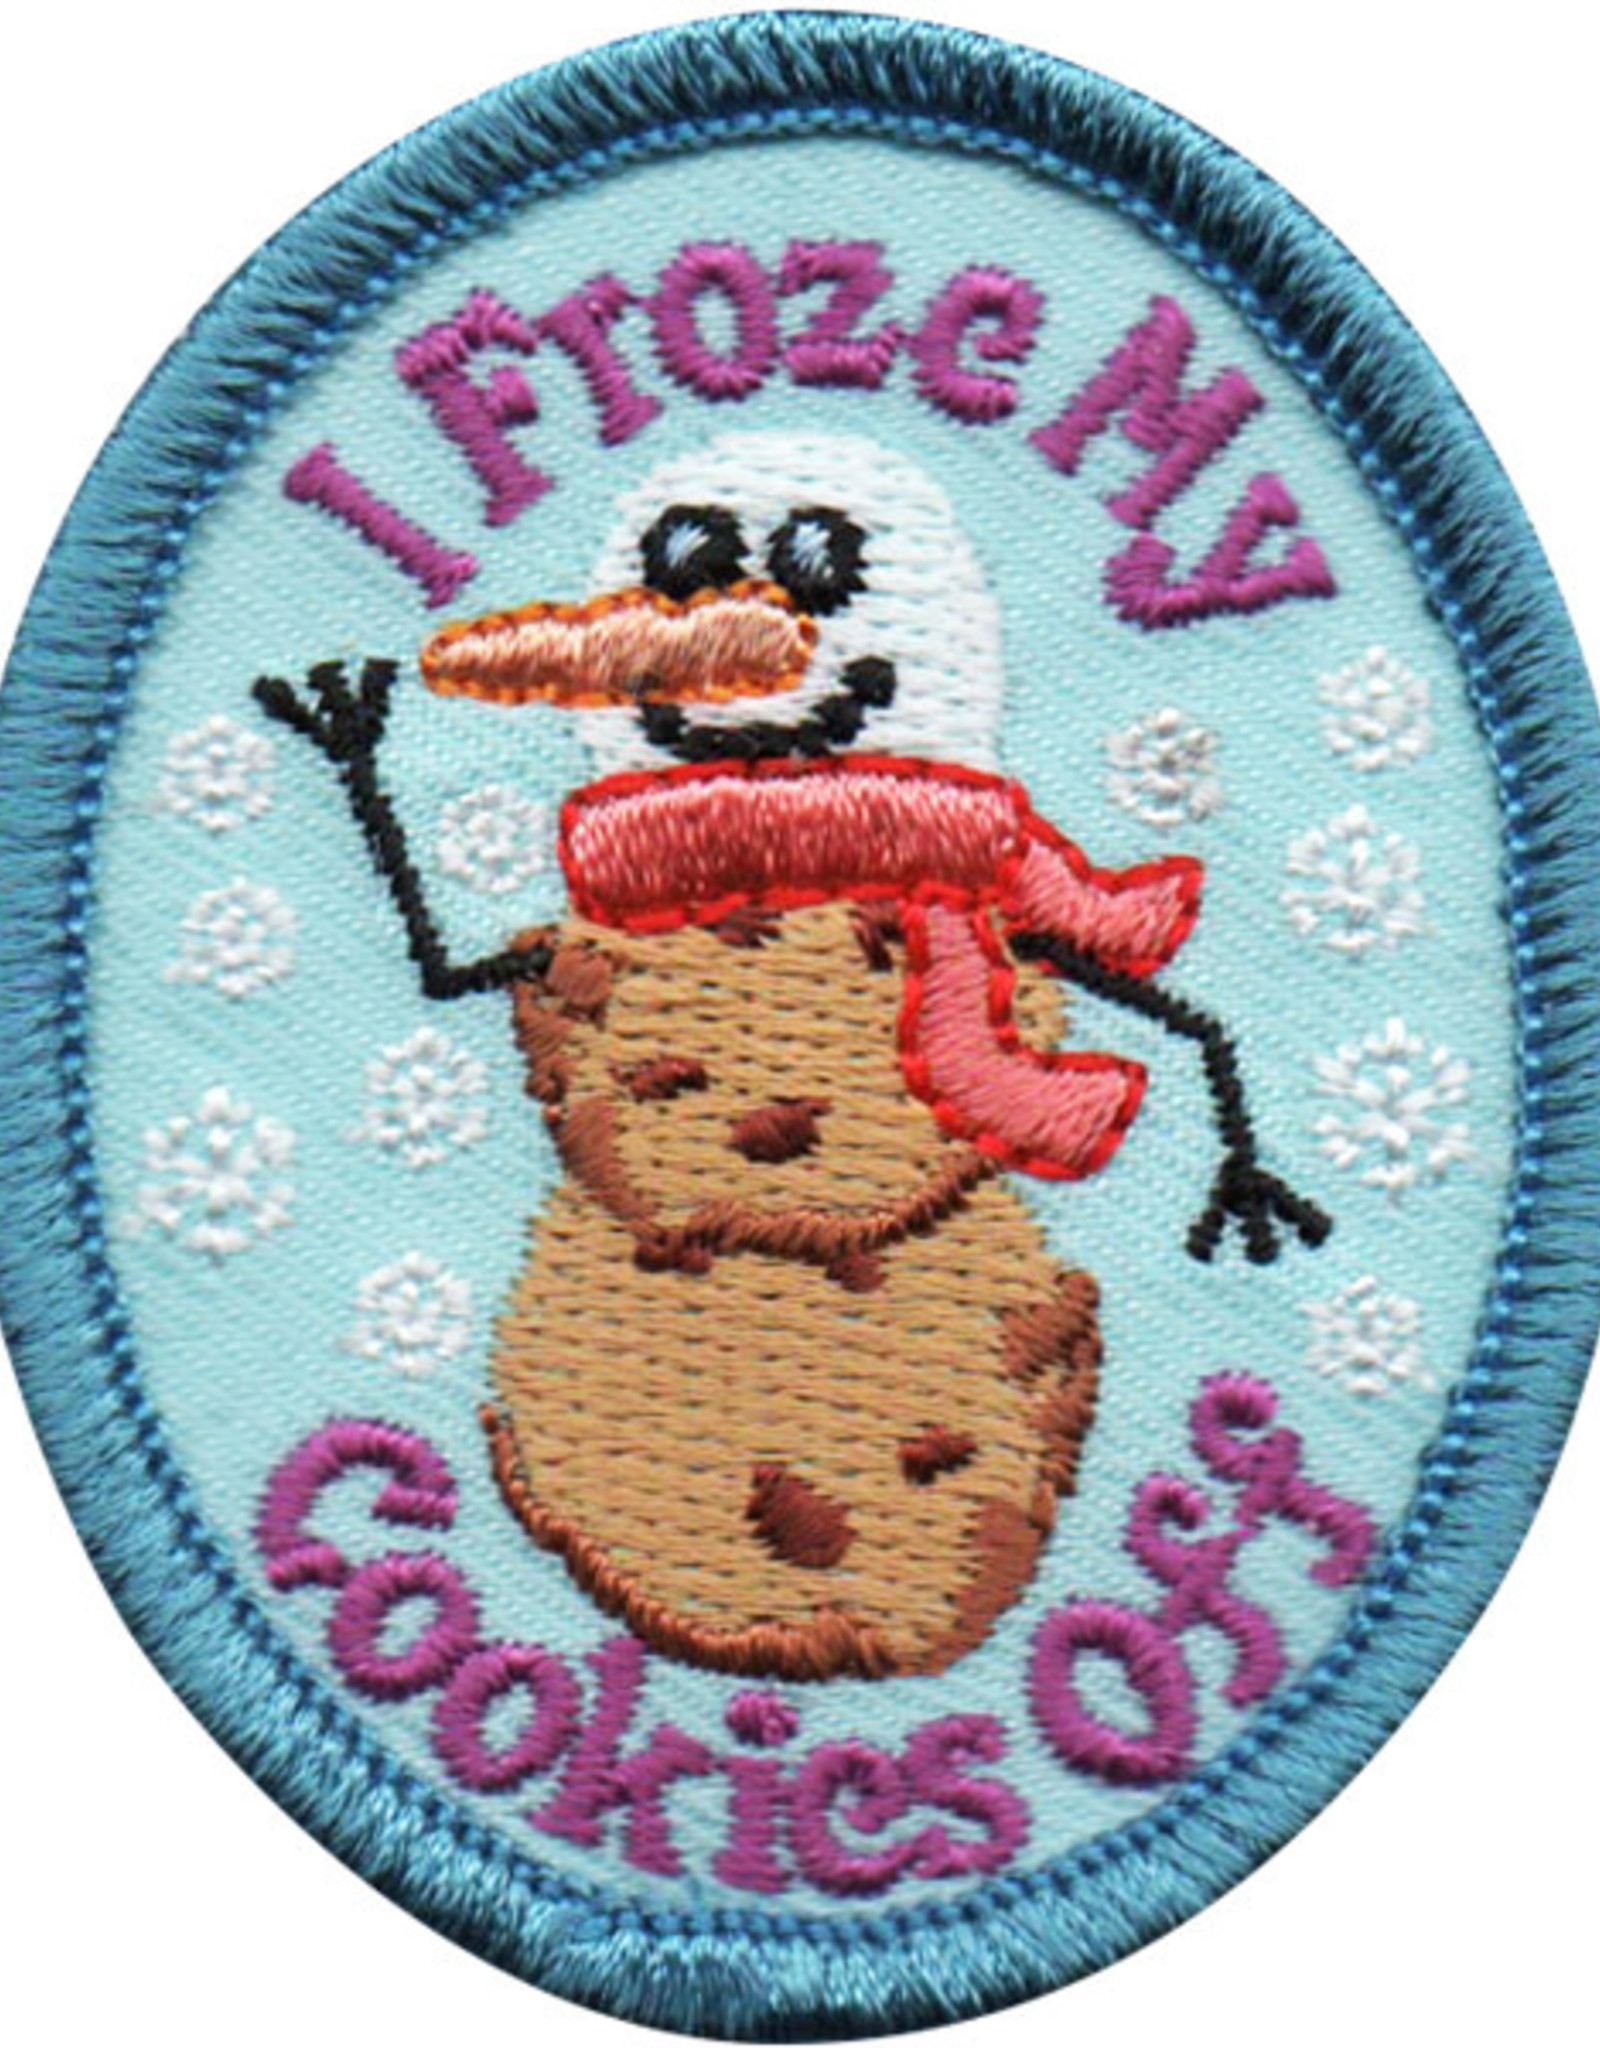 Advantage Emblem & Screen Prnt I Froze My Cookies Off (Snowman) Fun Patch